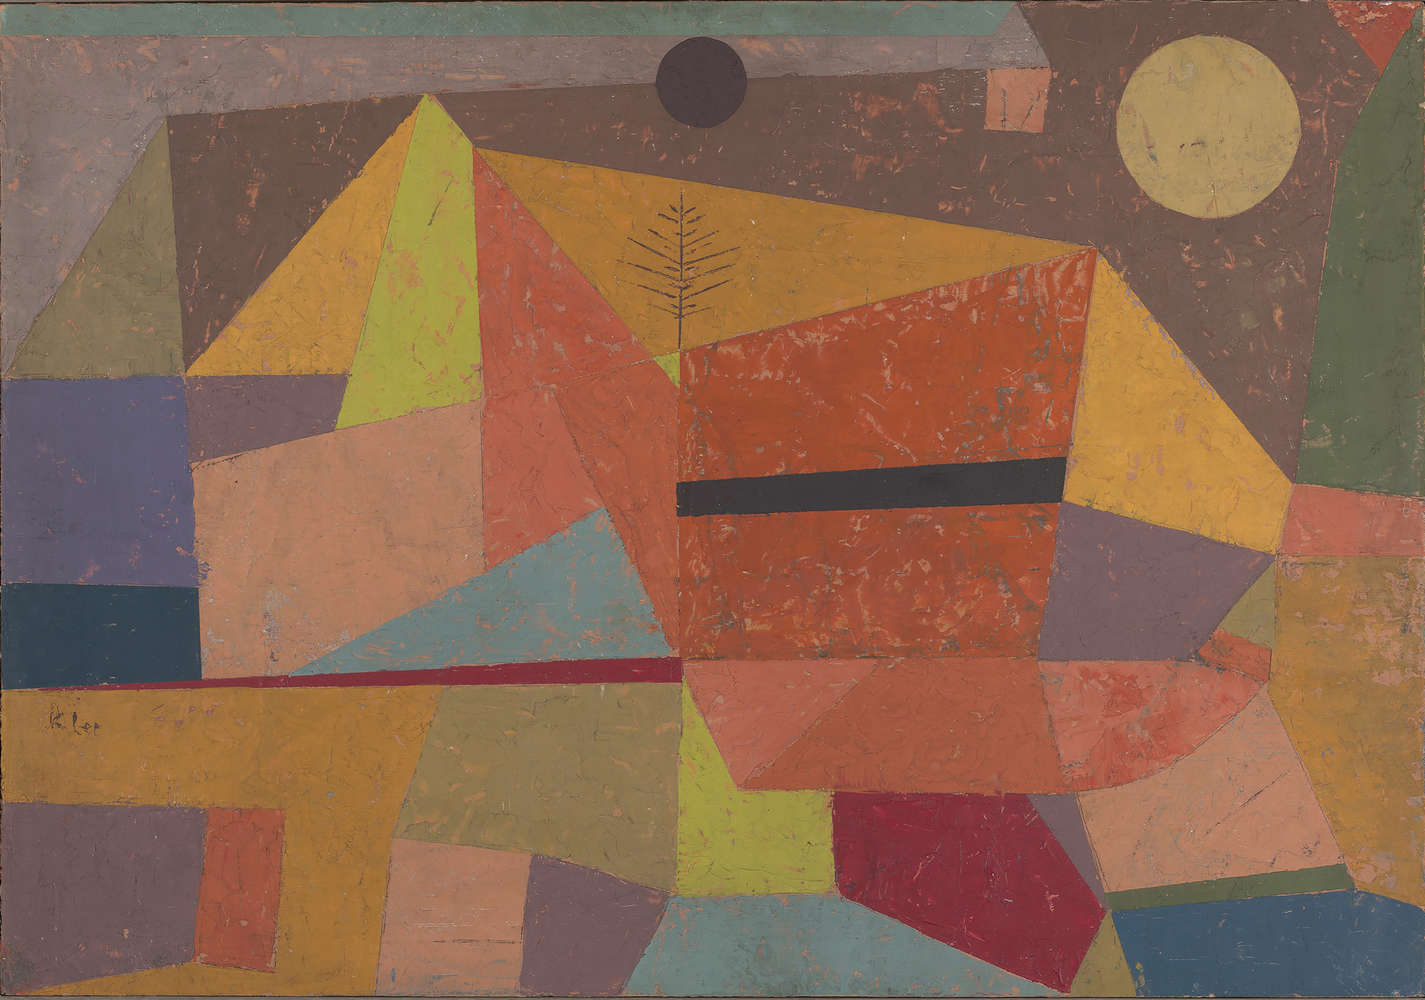             Mural "Alegre paisaje de montaña" de Paul Klee
        